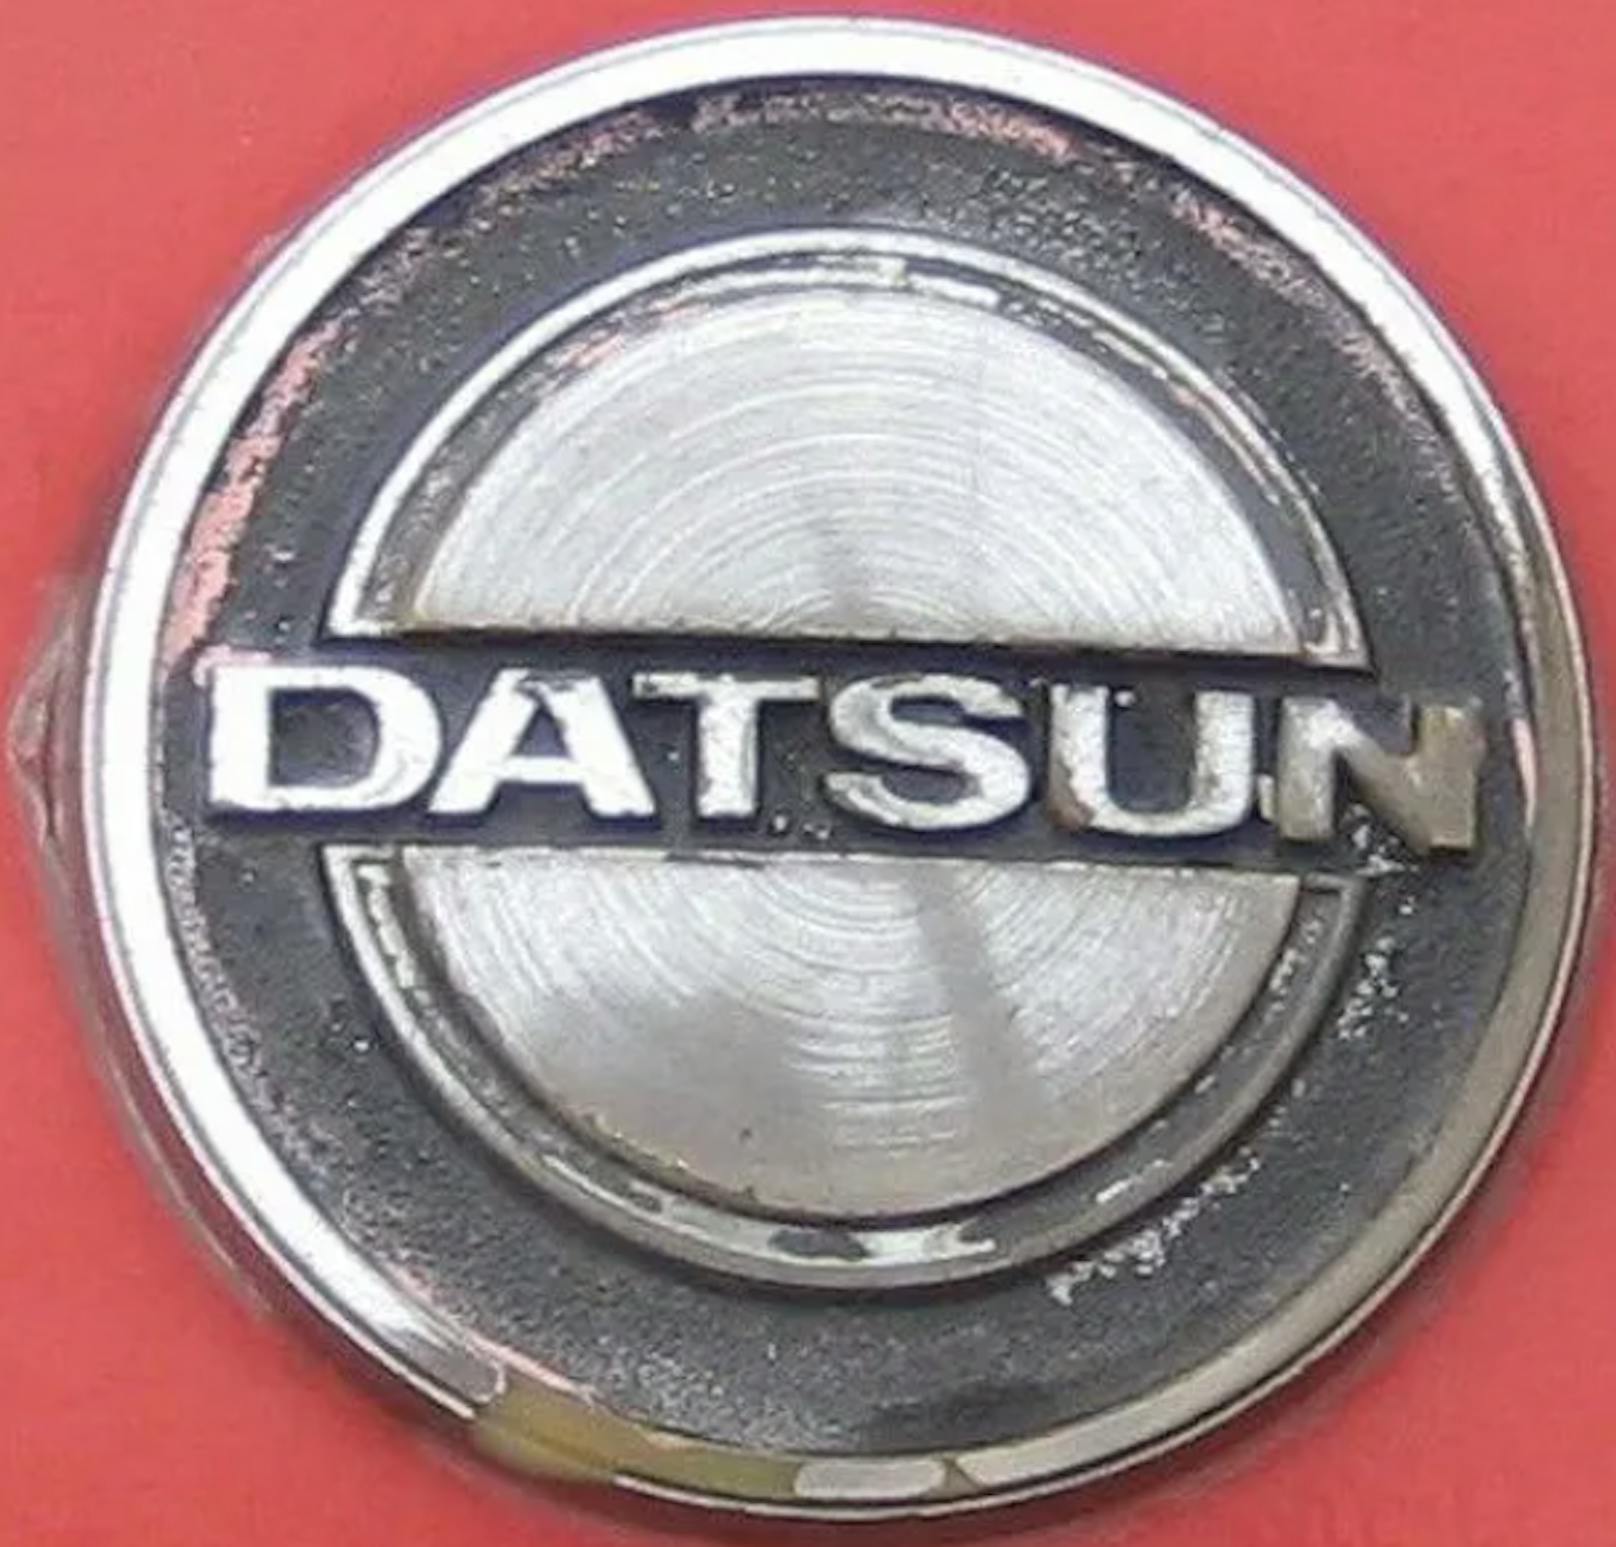 Datsun vor Aus – Nissan lässt Billig-Marke sterben